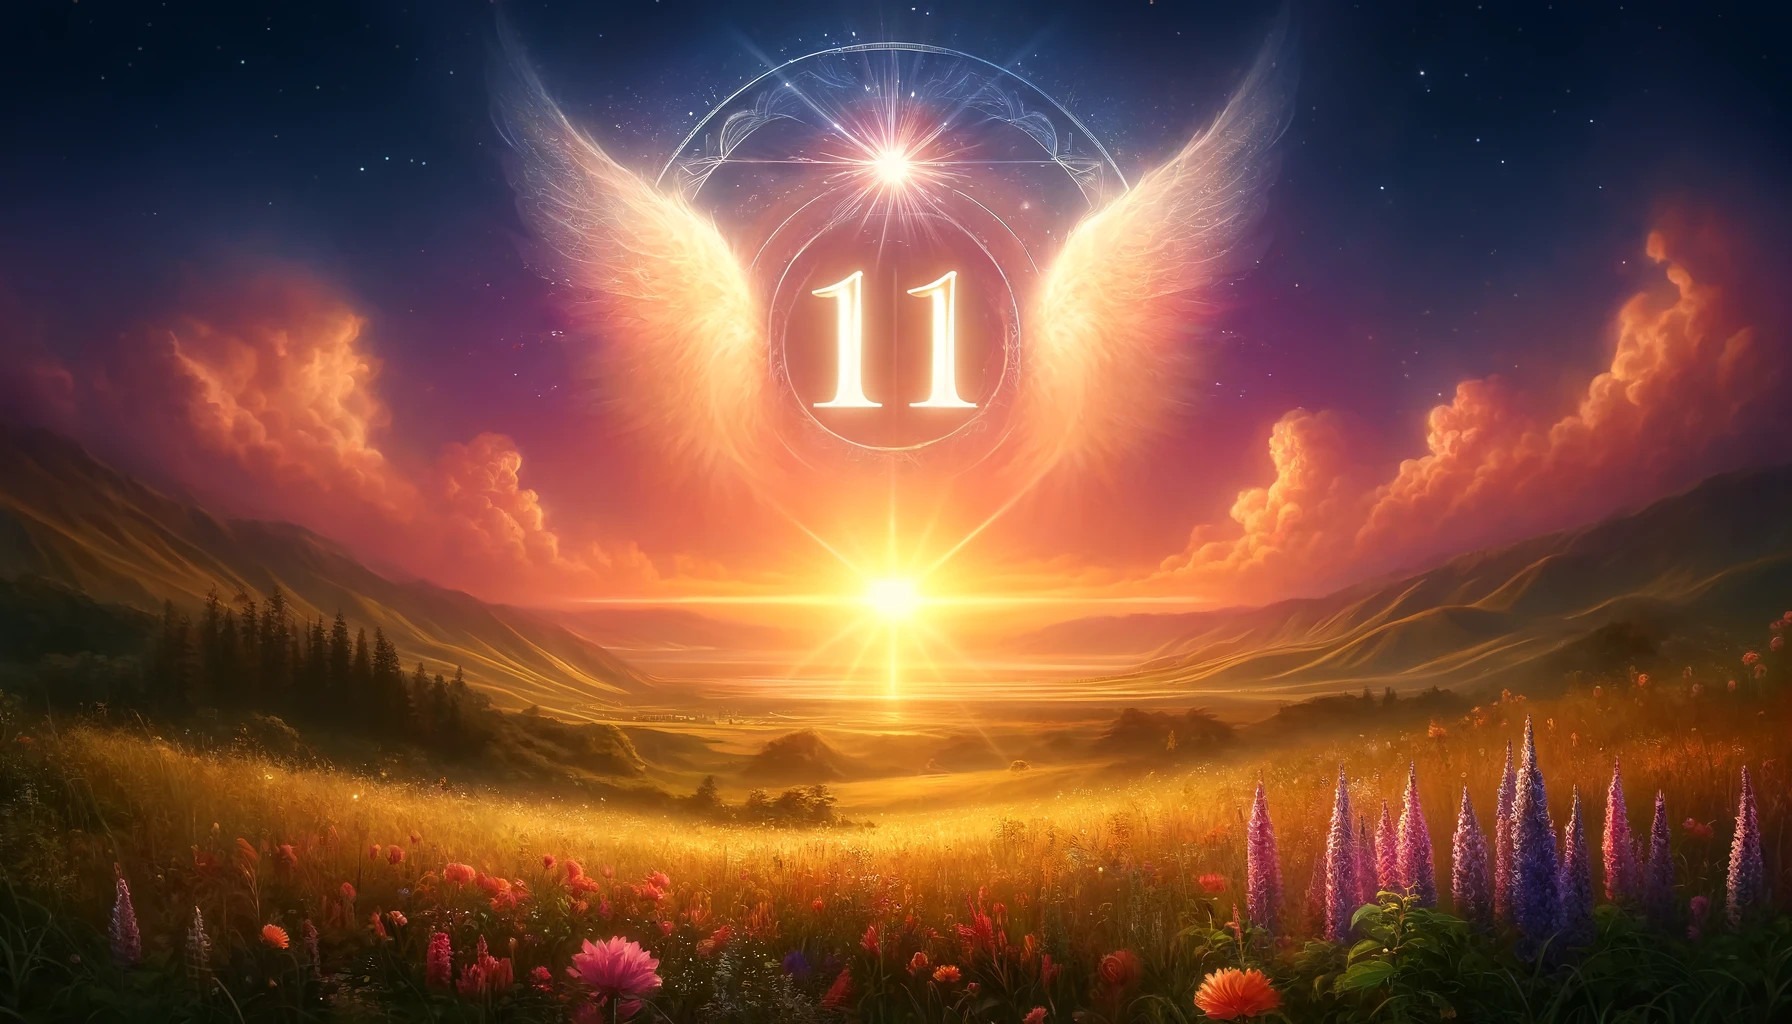 engelengetal 11